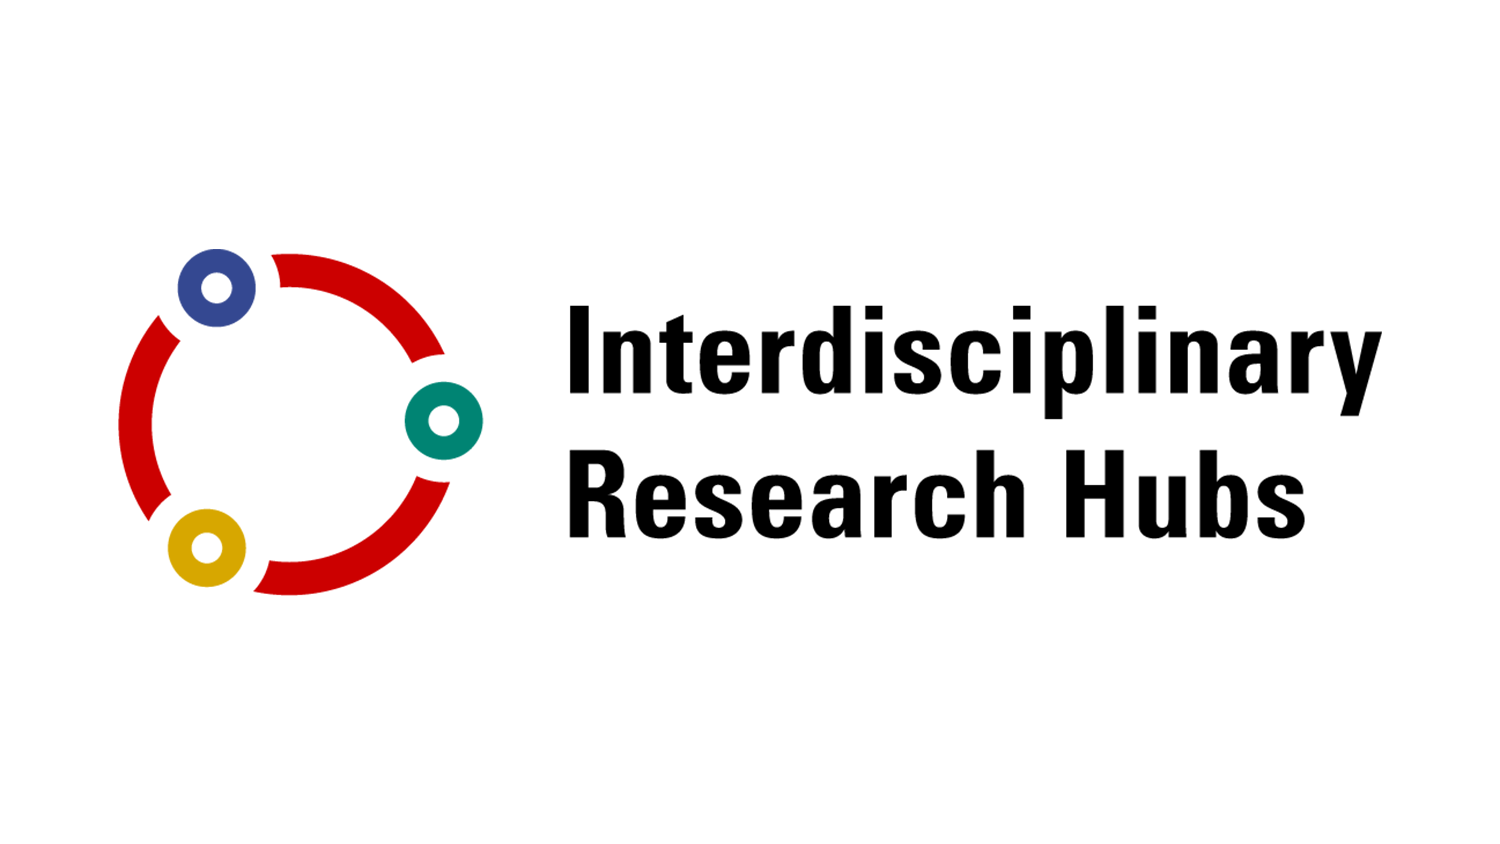 Interdisciplinary Research Hubs